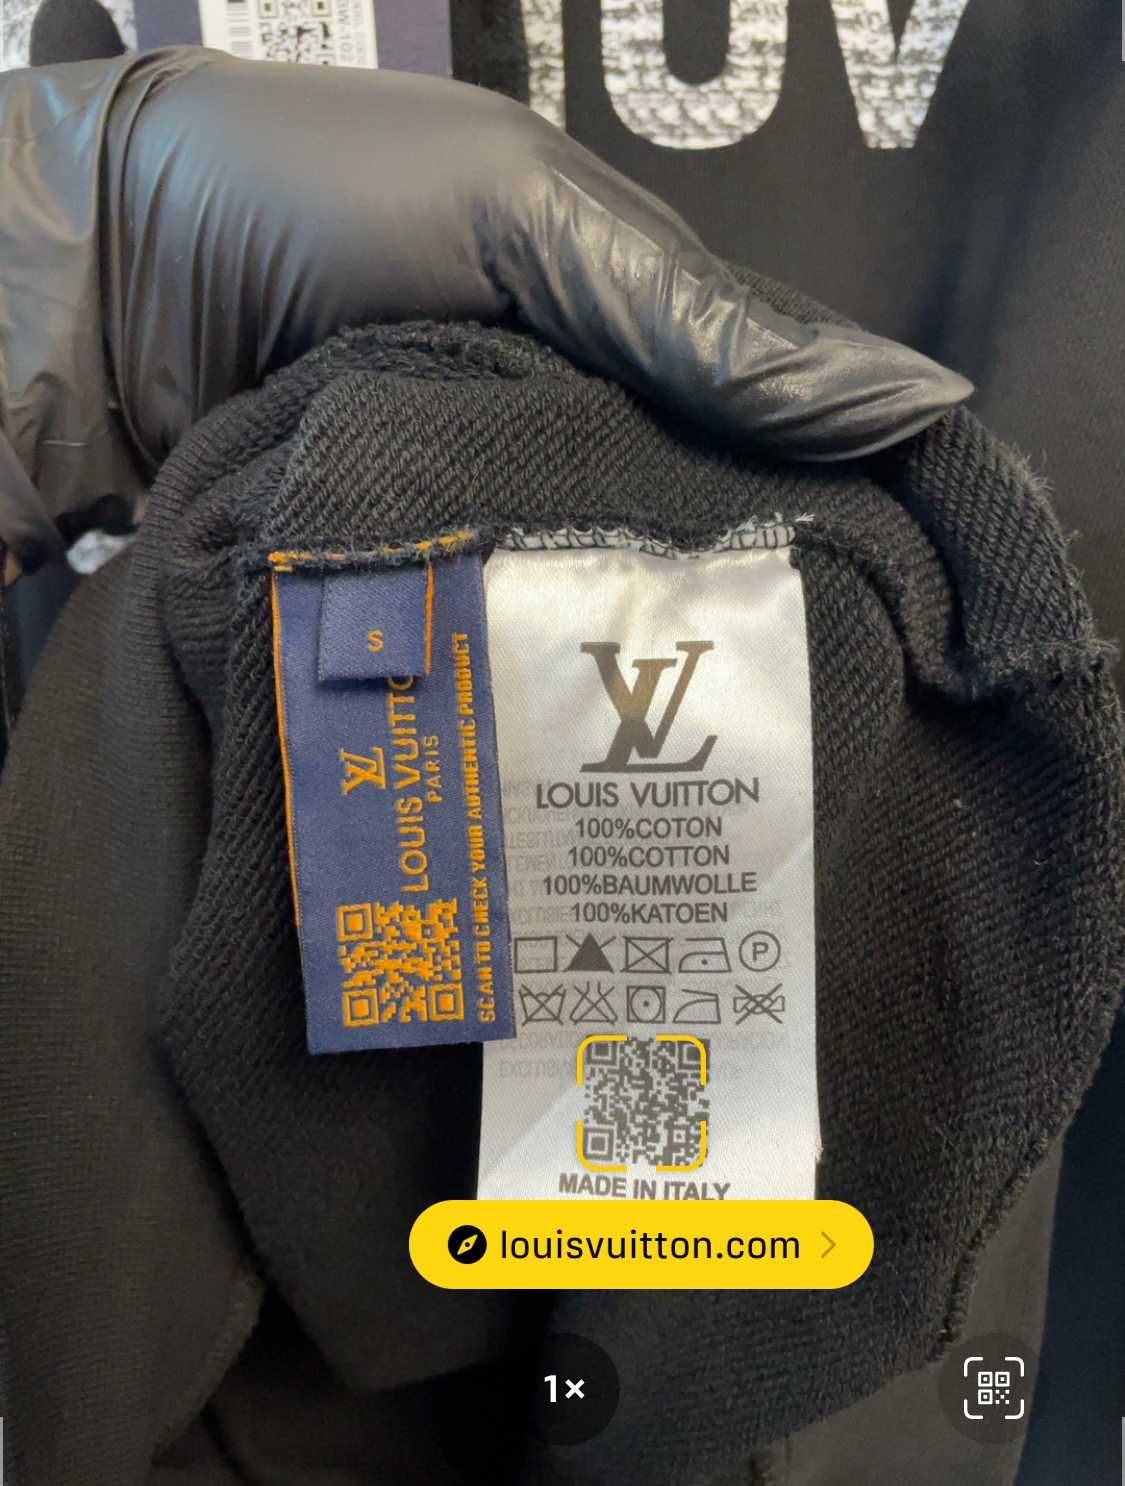 Hoodie/Hanorac Louis Vuitton Bucuresti Sectorul 3 • OLX.ro